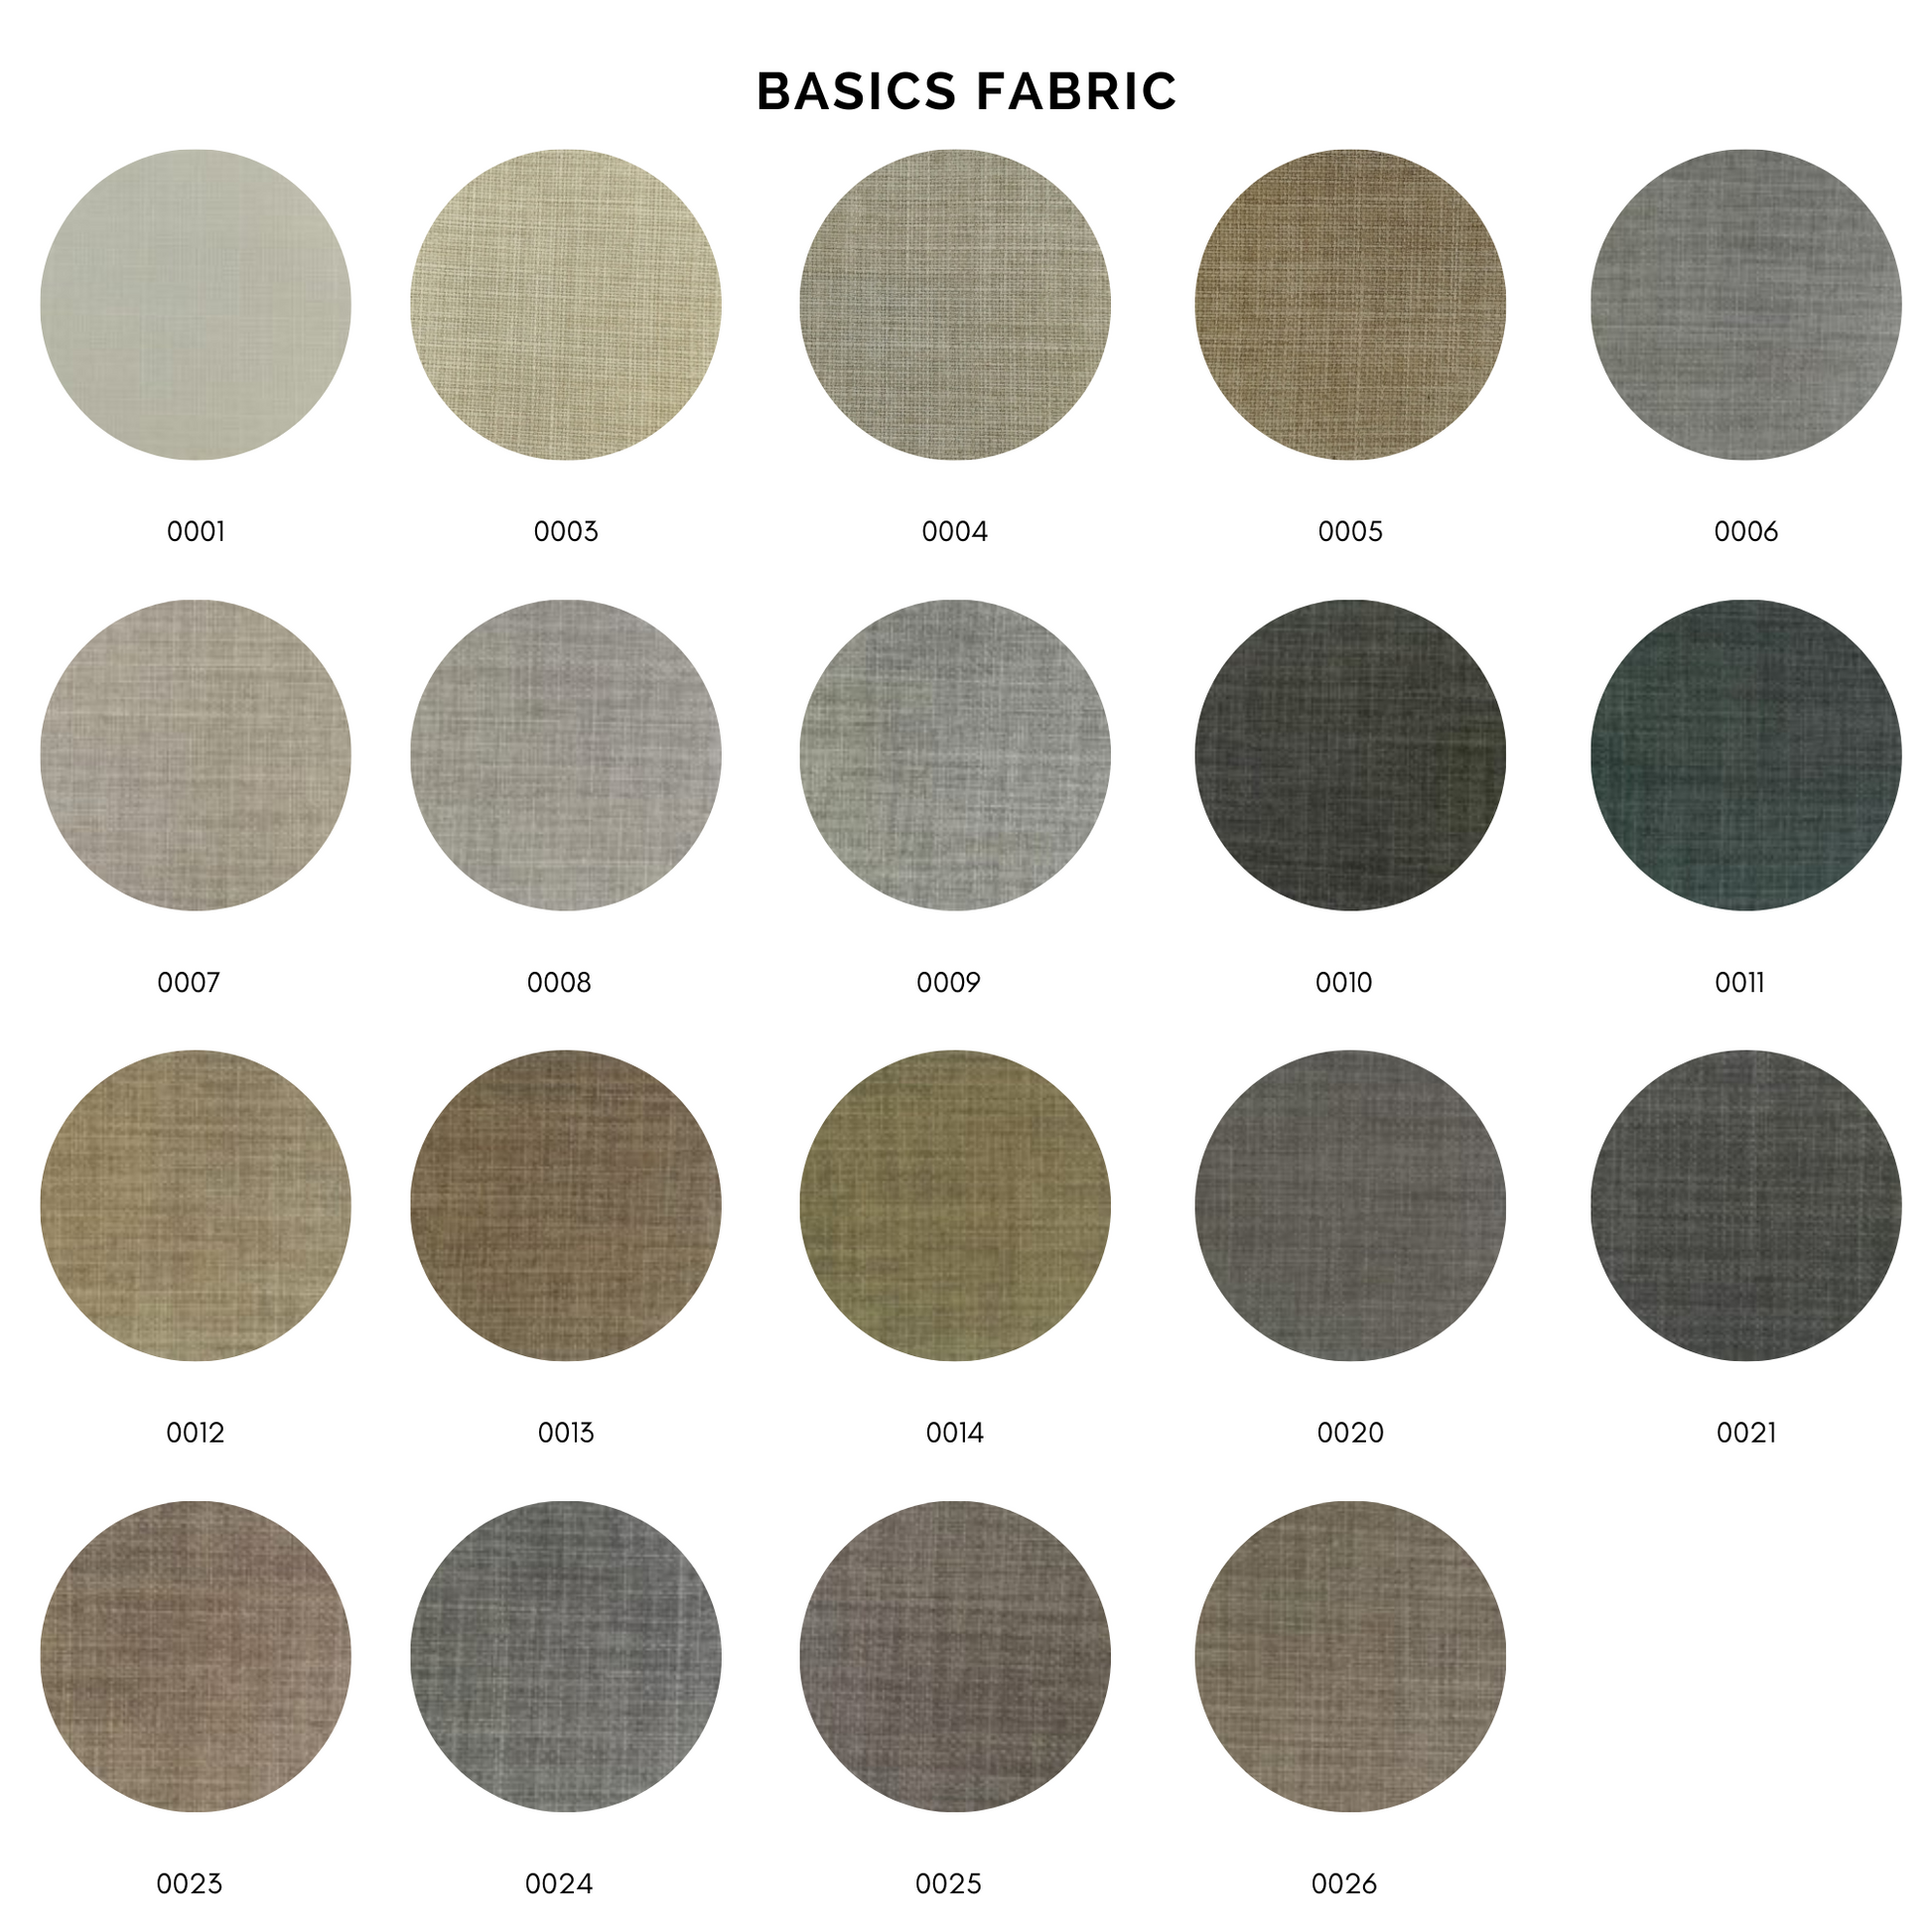 Tanner Cot - Basics Fabric - Elula Furniture